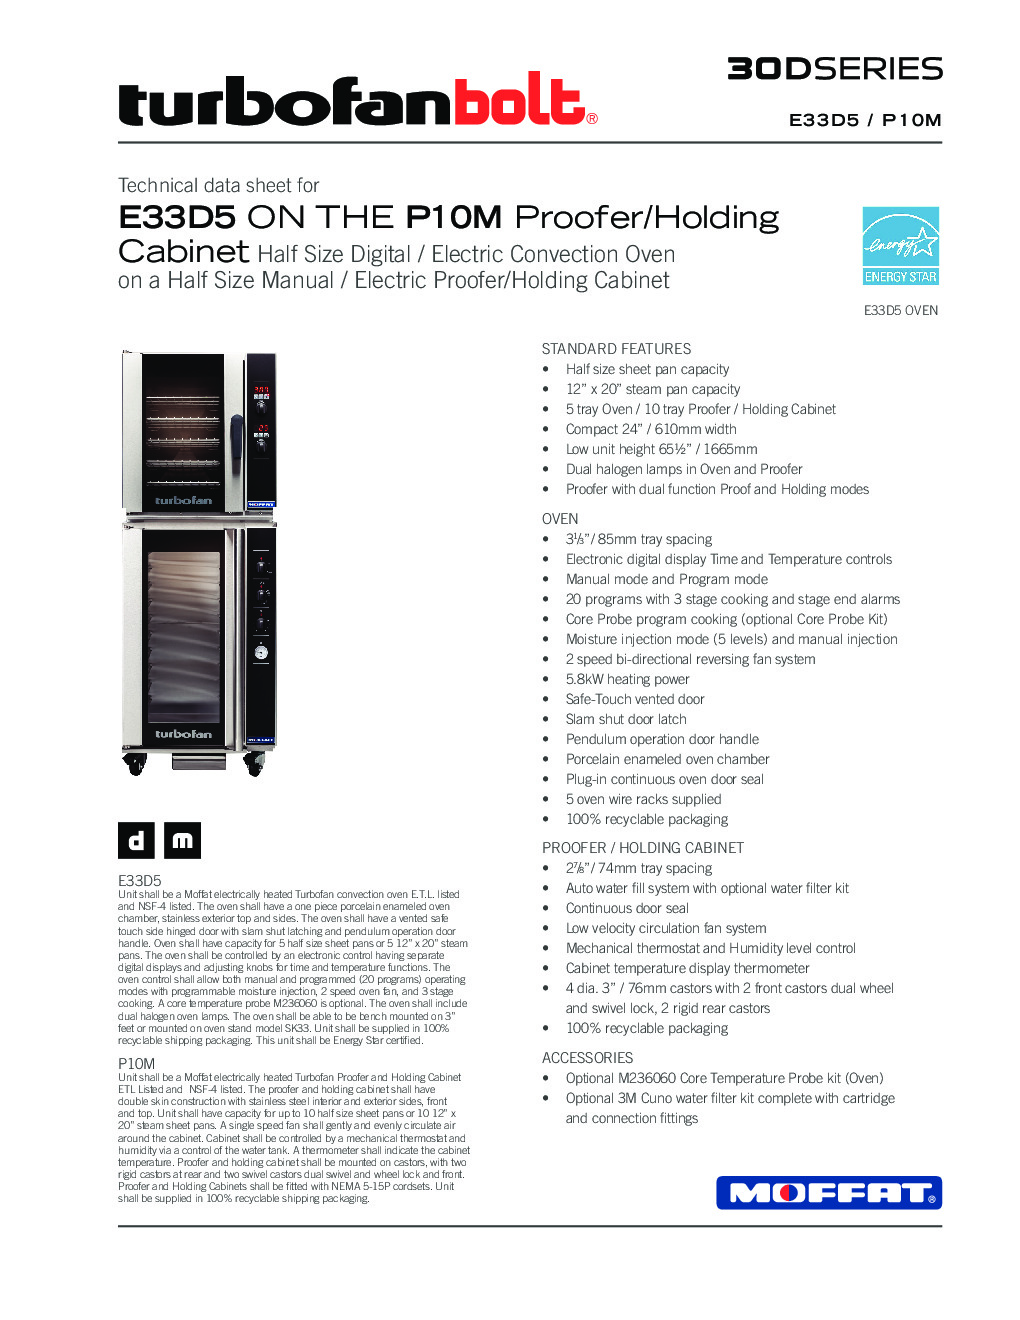 Moffat E33D5/P10M Electric Convection Oven